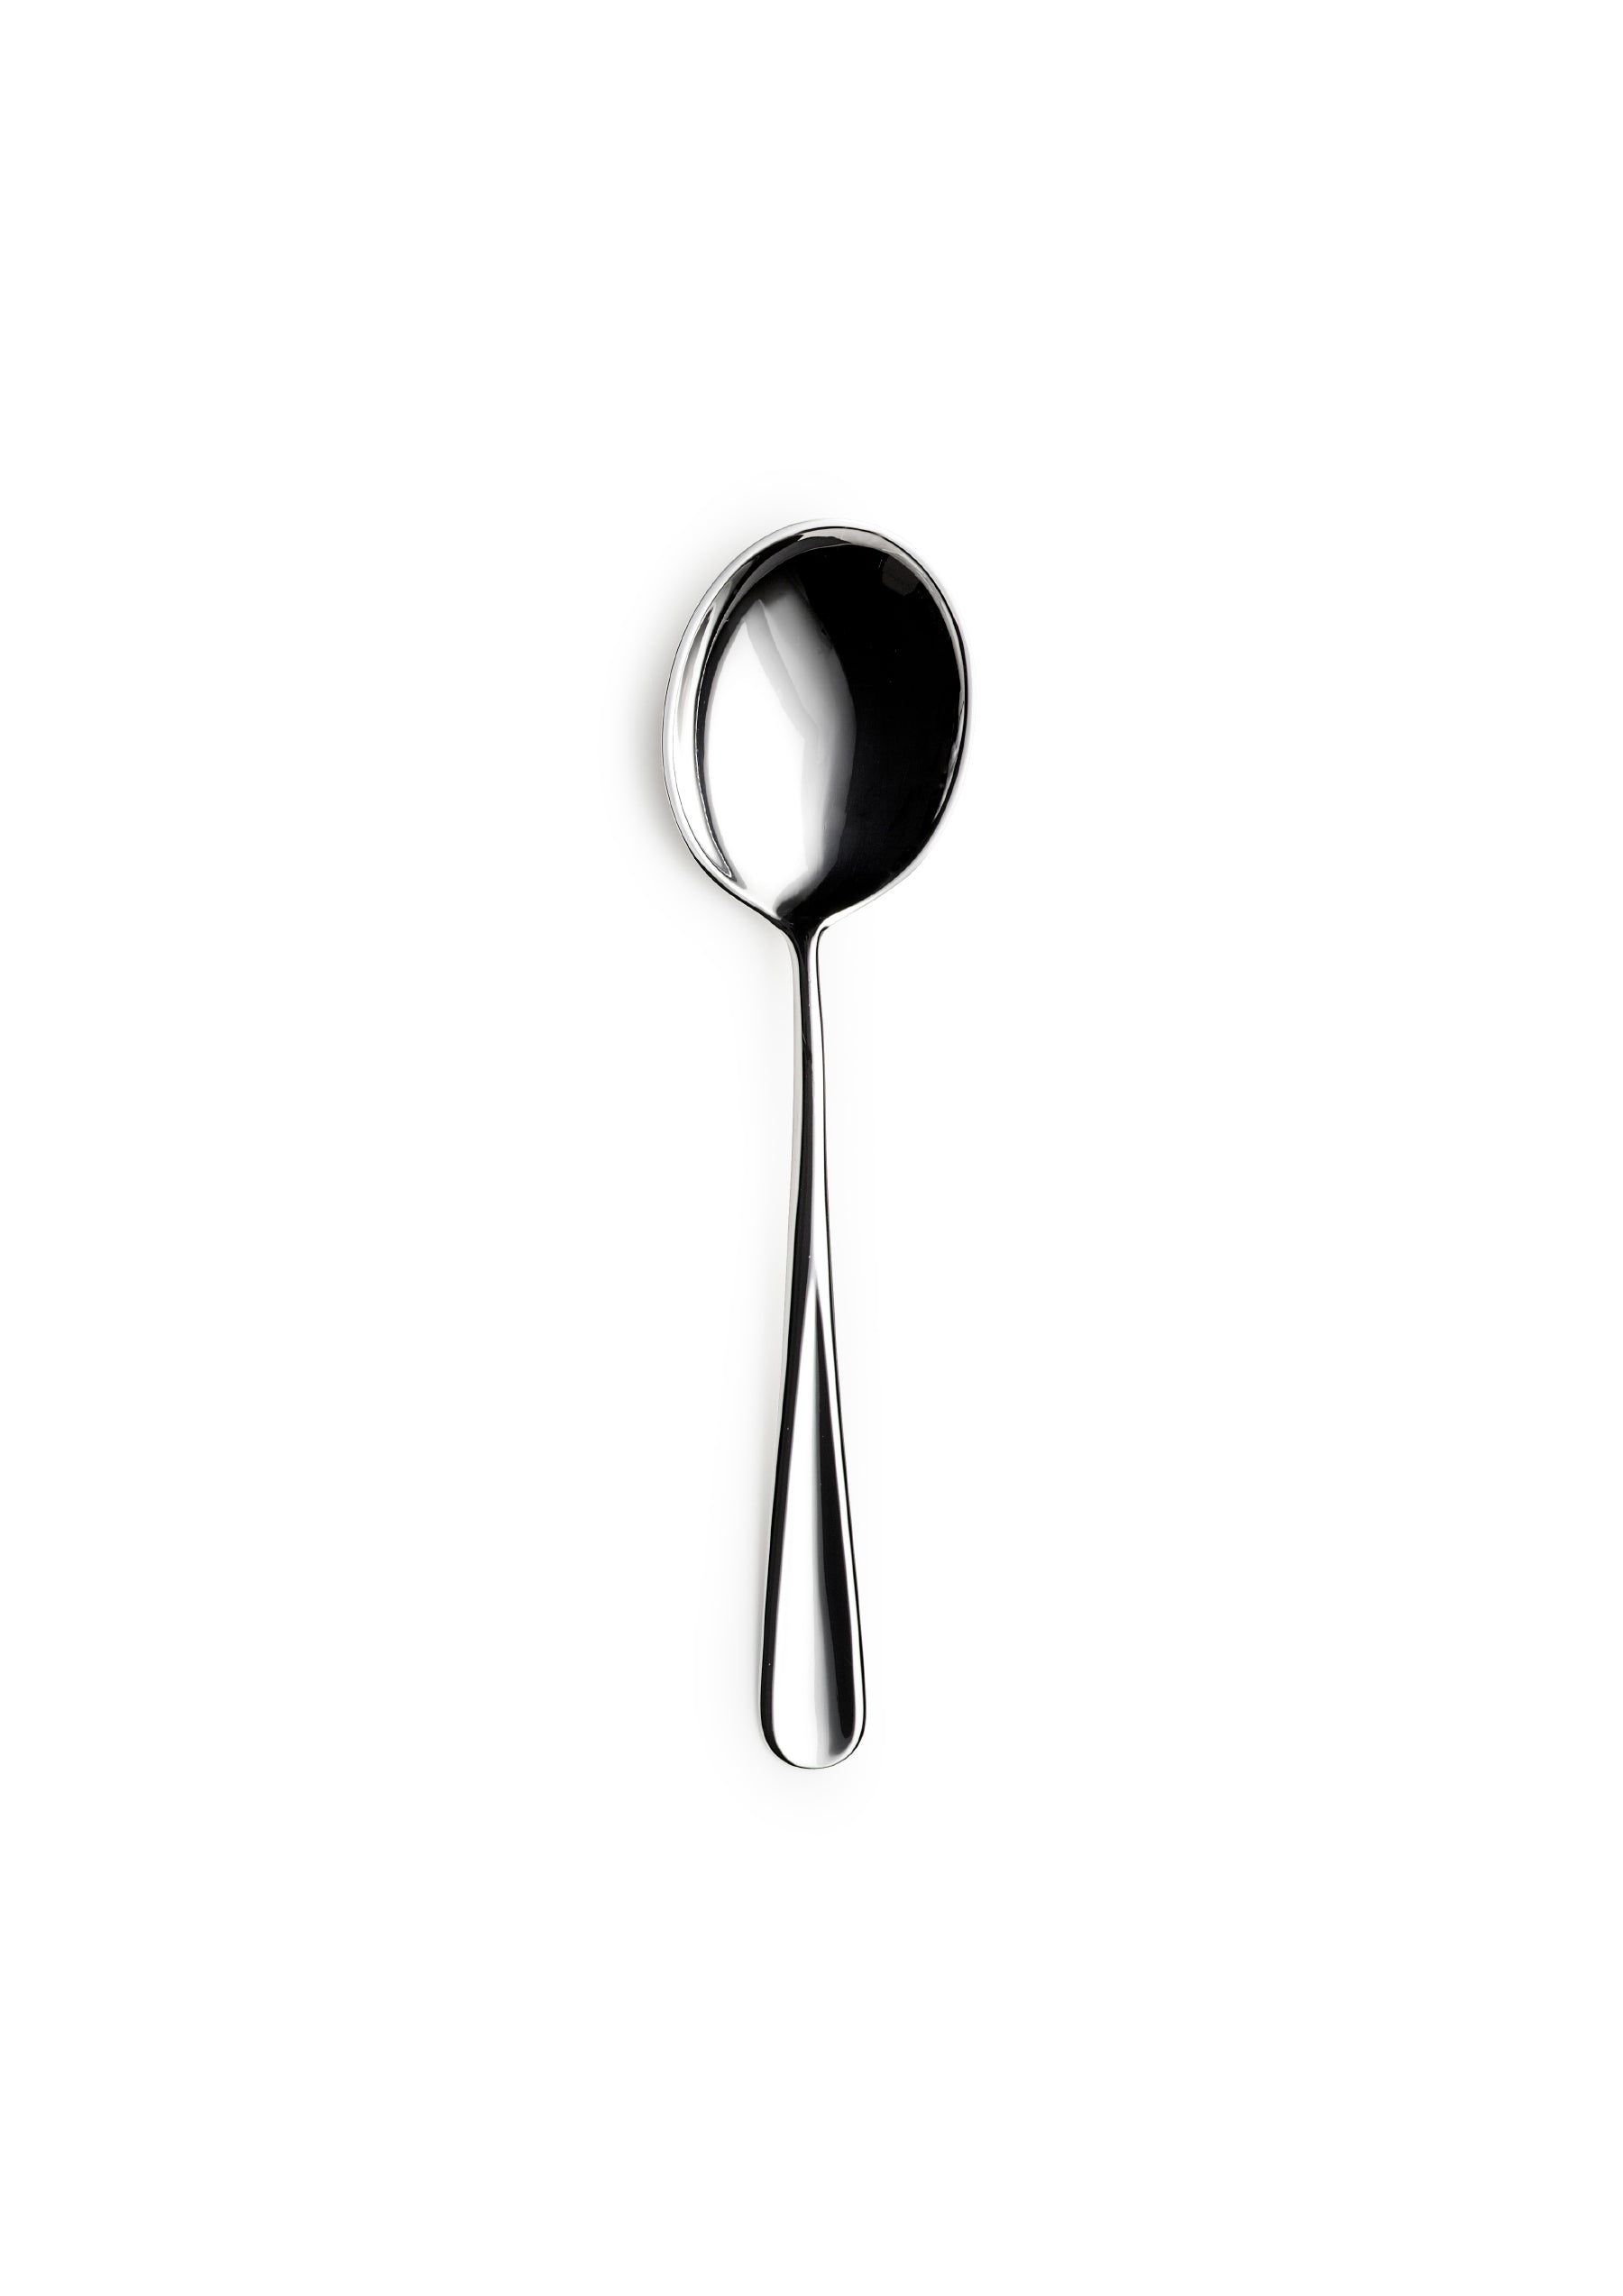 Moon jam spoon